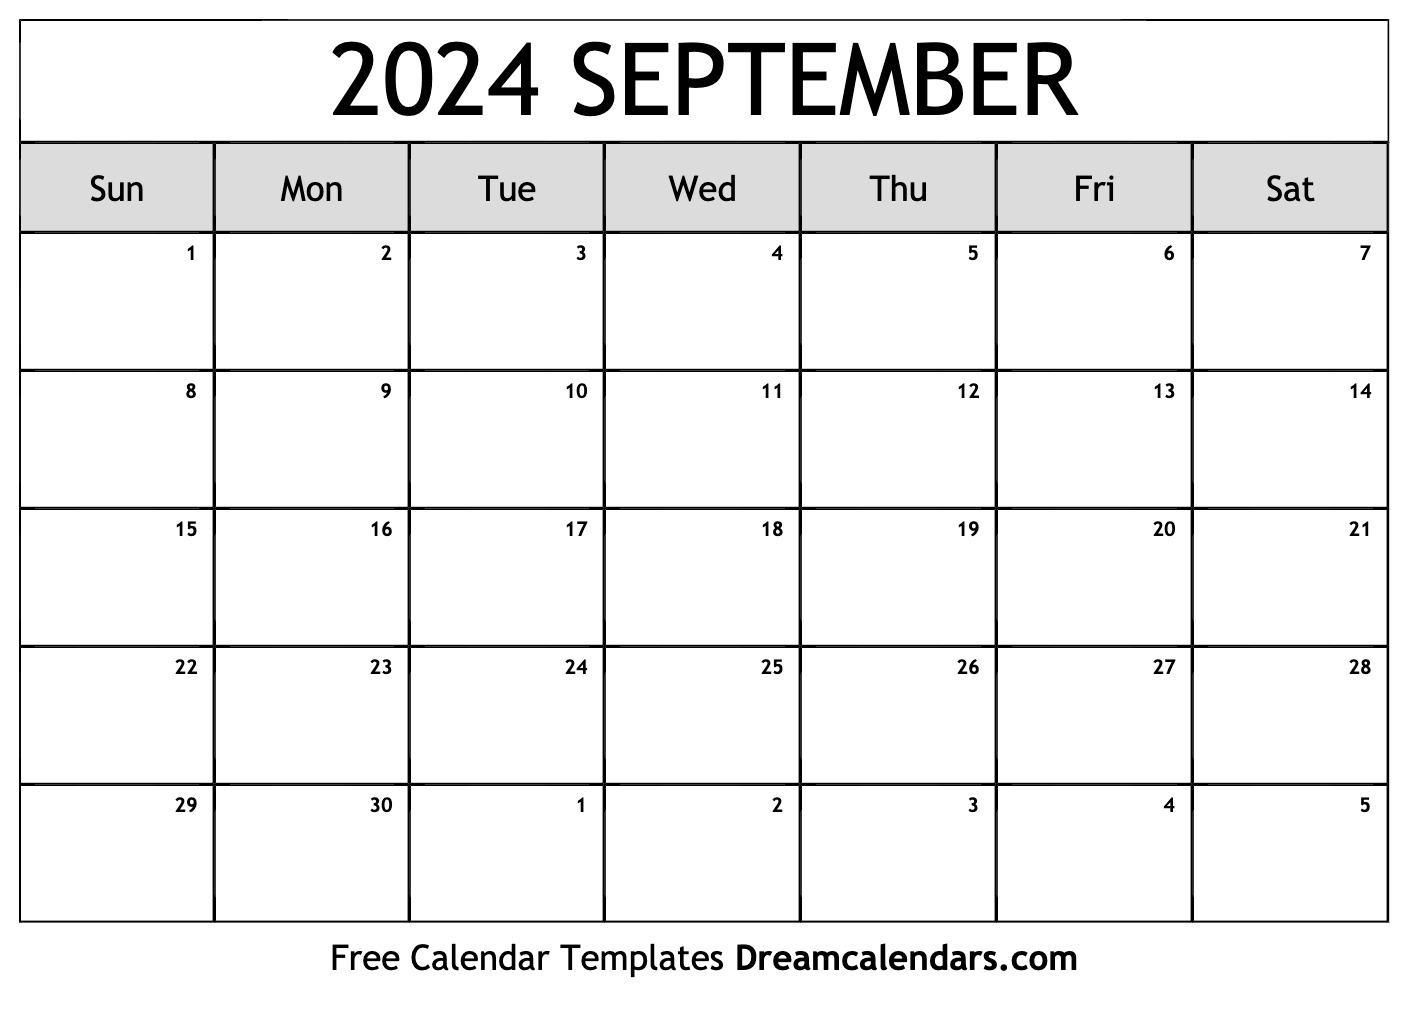 September 2024 Calendar | Free Blank Printable With Holidays in Free Printable Calendar 2024 Sept December